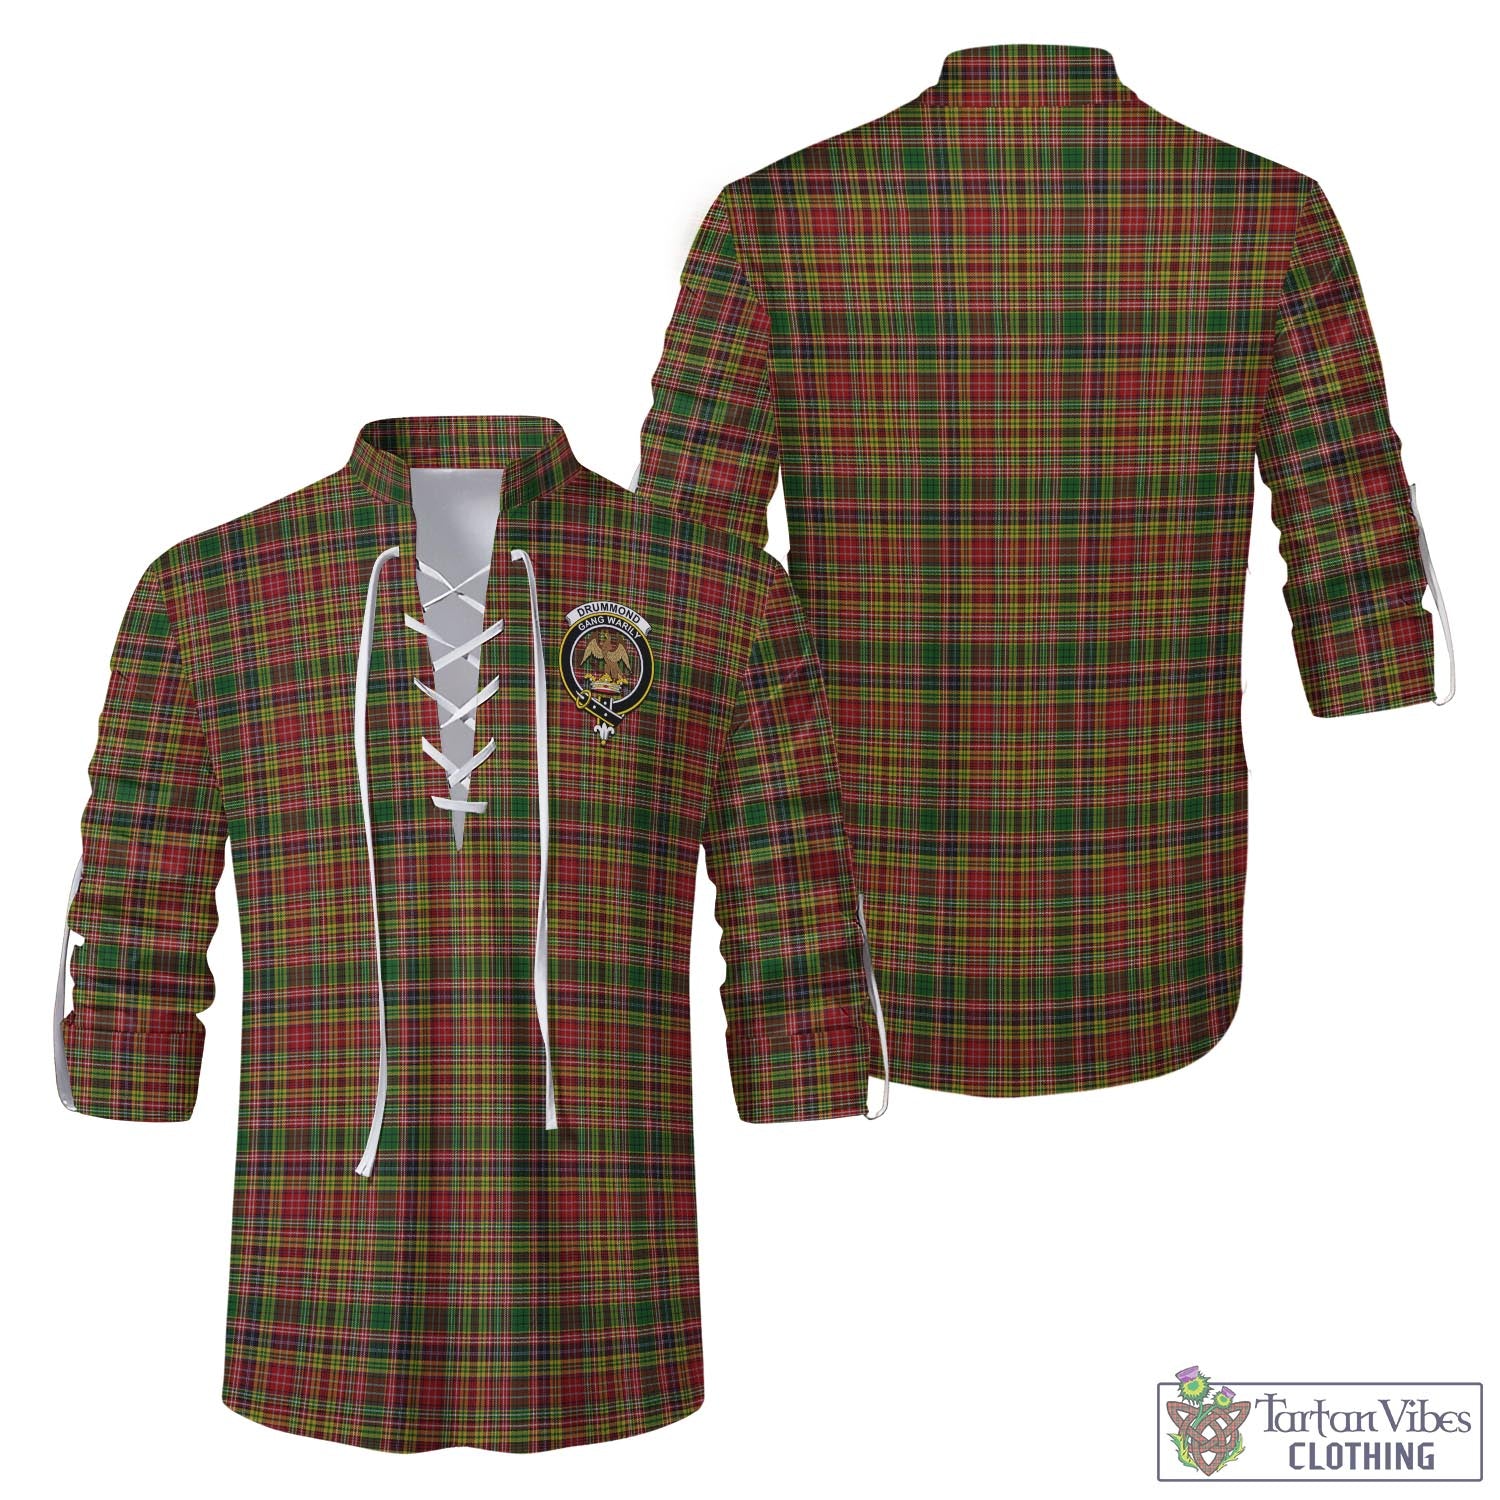 Tartan Vibes Clothing Drummond of Strathallan Tartan Men's Scottish Traditional Jacobite Ghillie Kilt Shirt with Family Crest